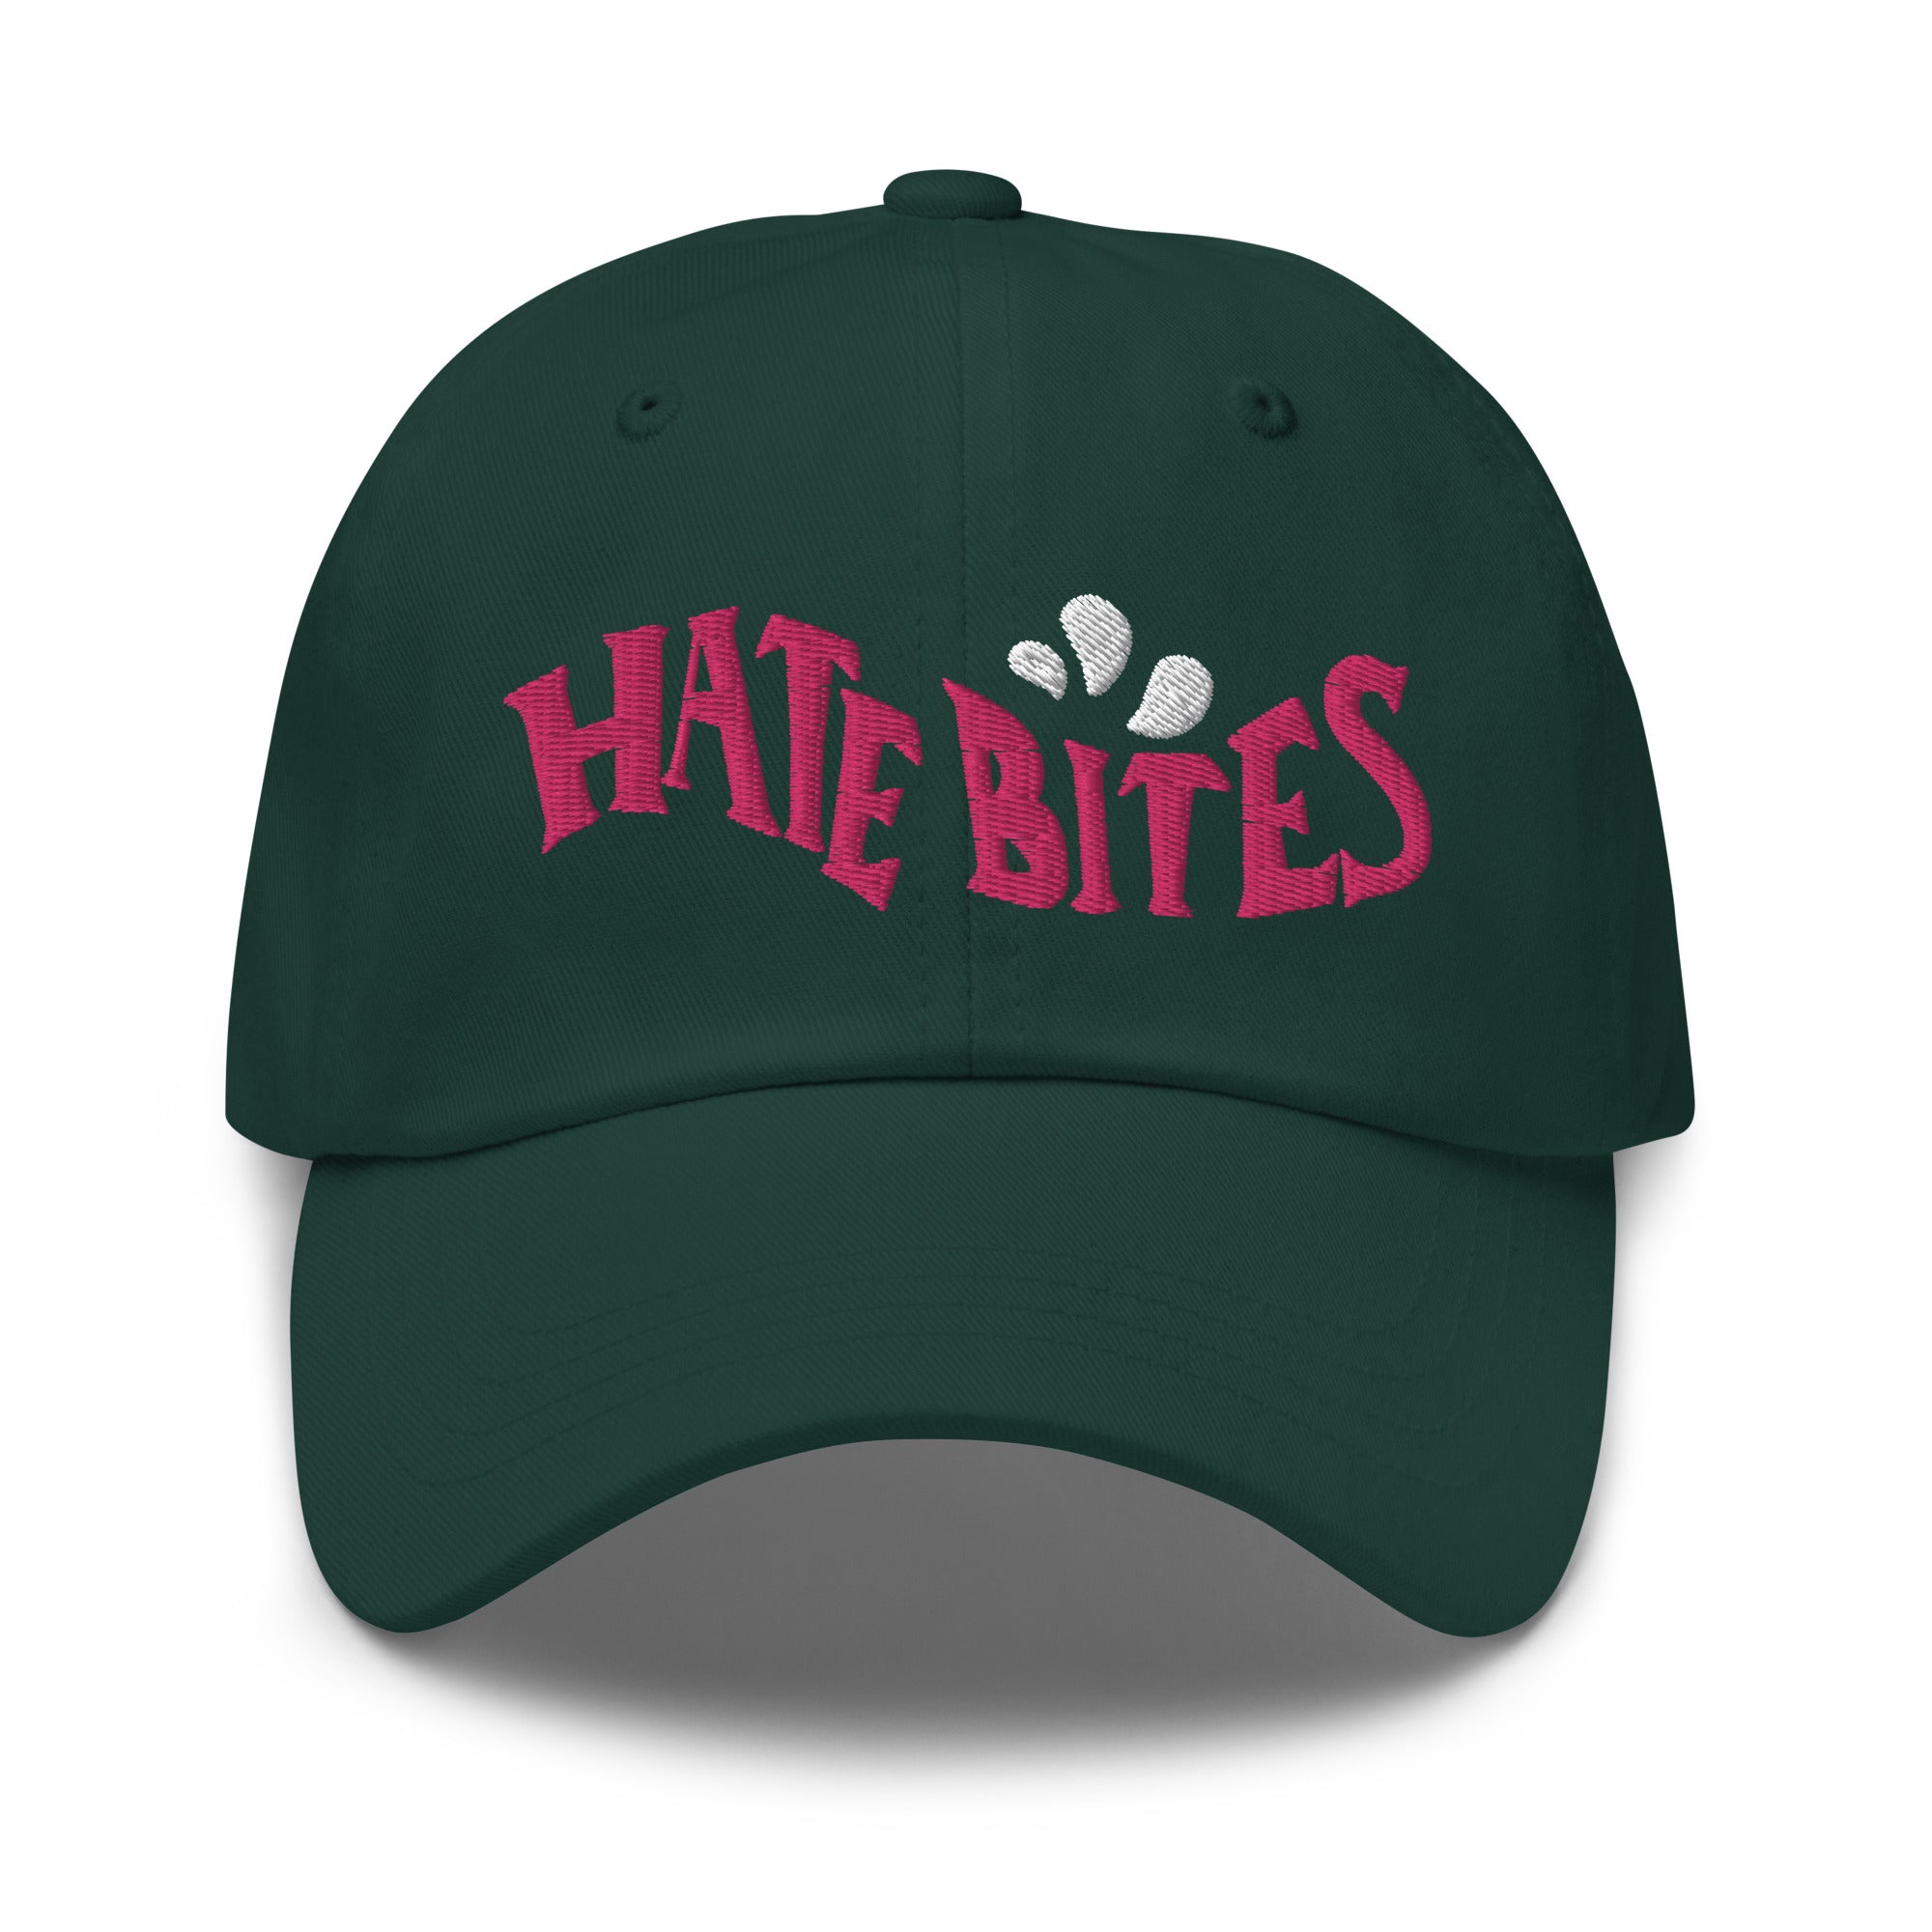 Hate Bites Dad hat